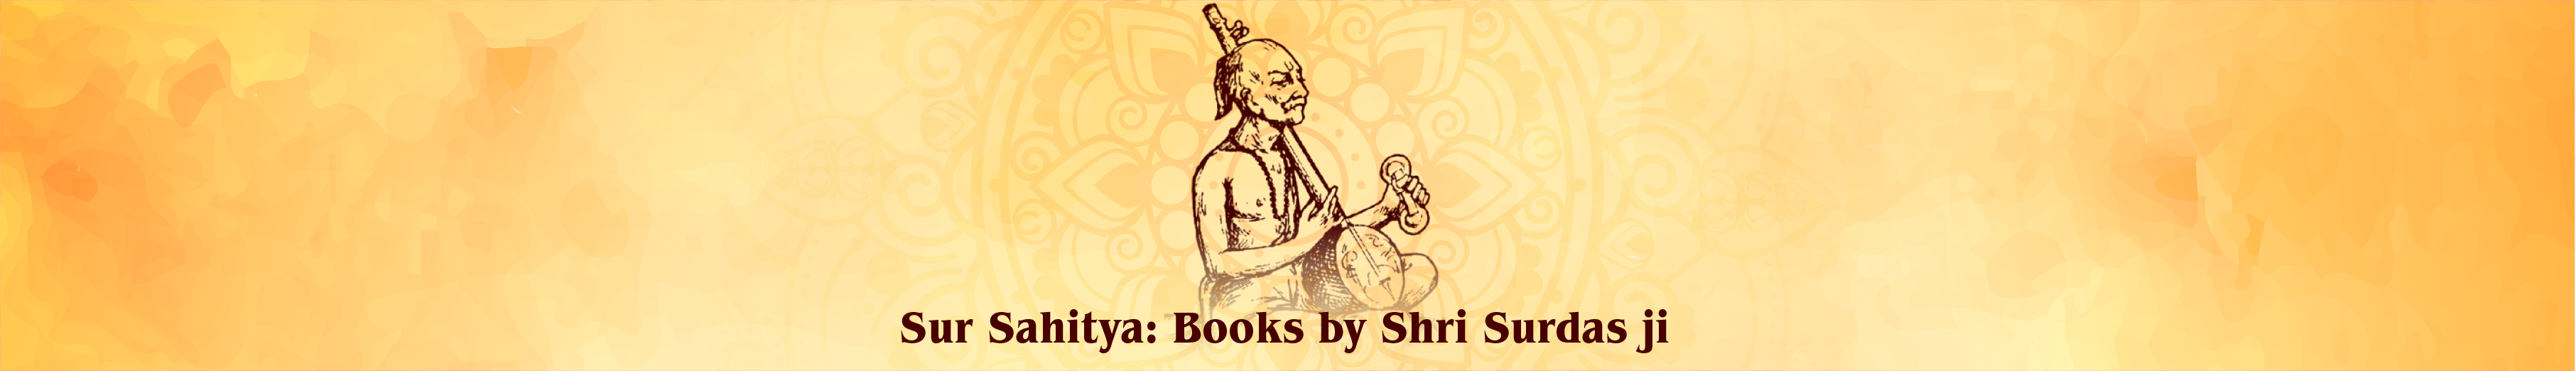 Soor Sahitya: Books by Shri Soordas ji